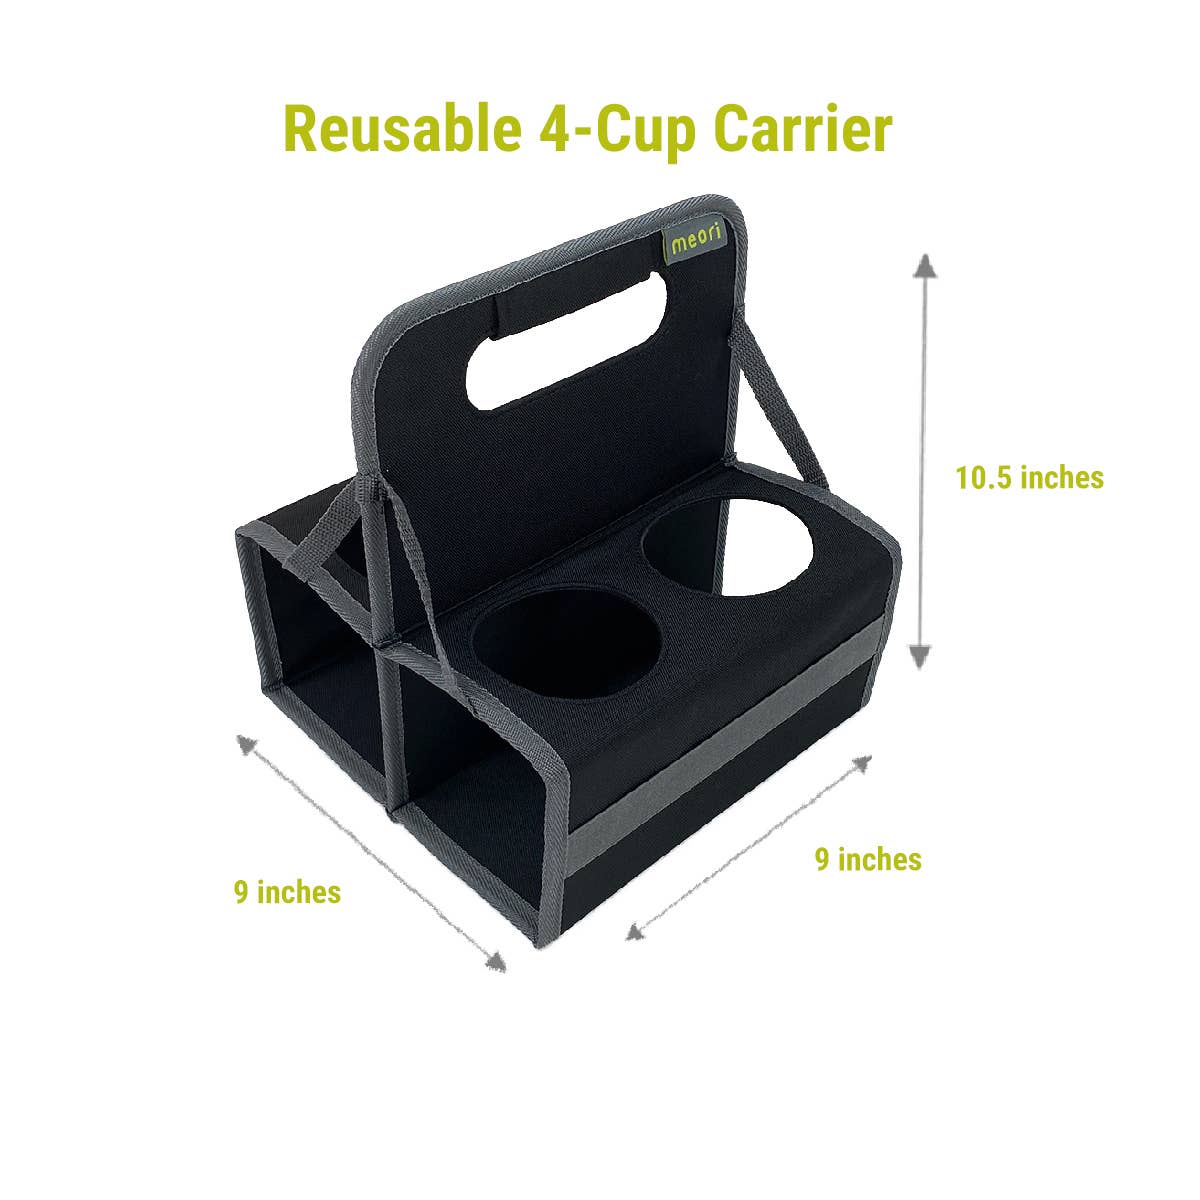 Reusable  Drink Carriers 6-Cup / Lava Black